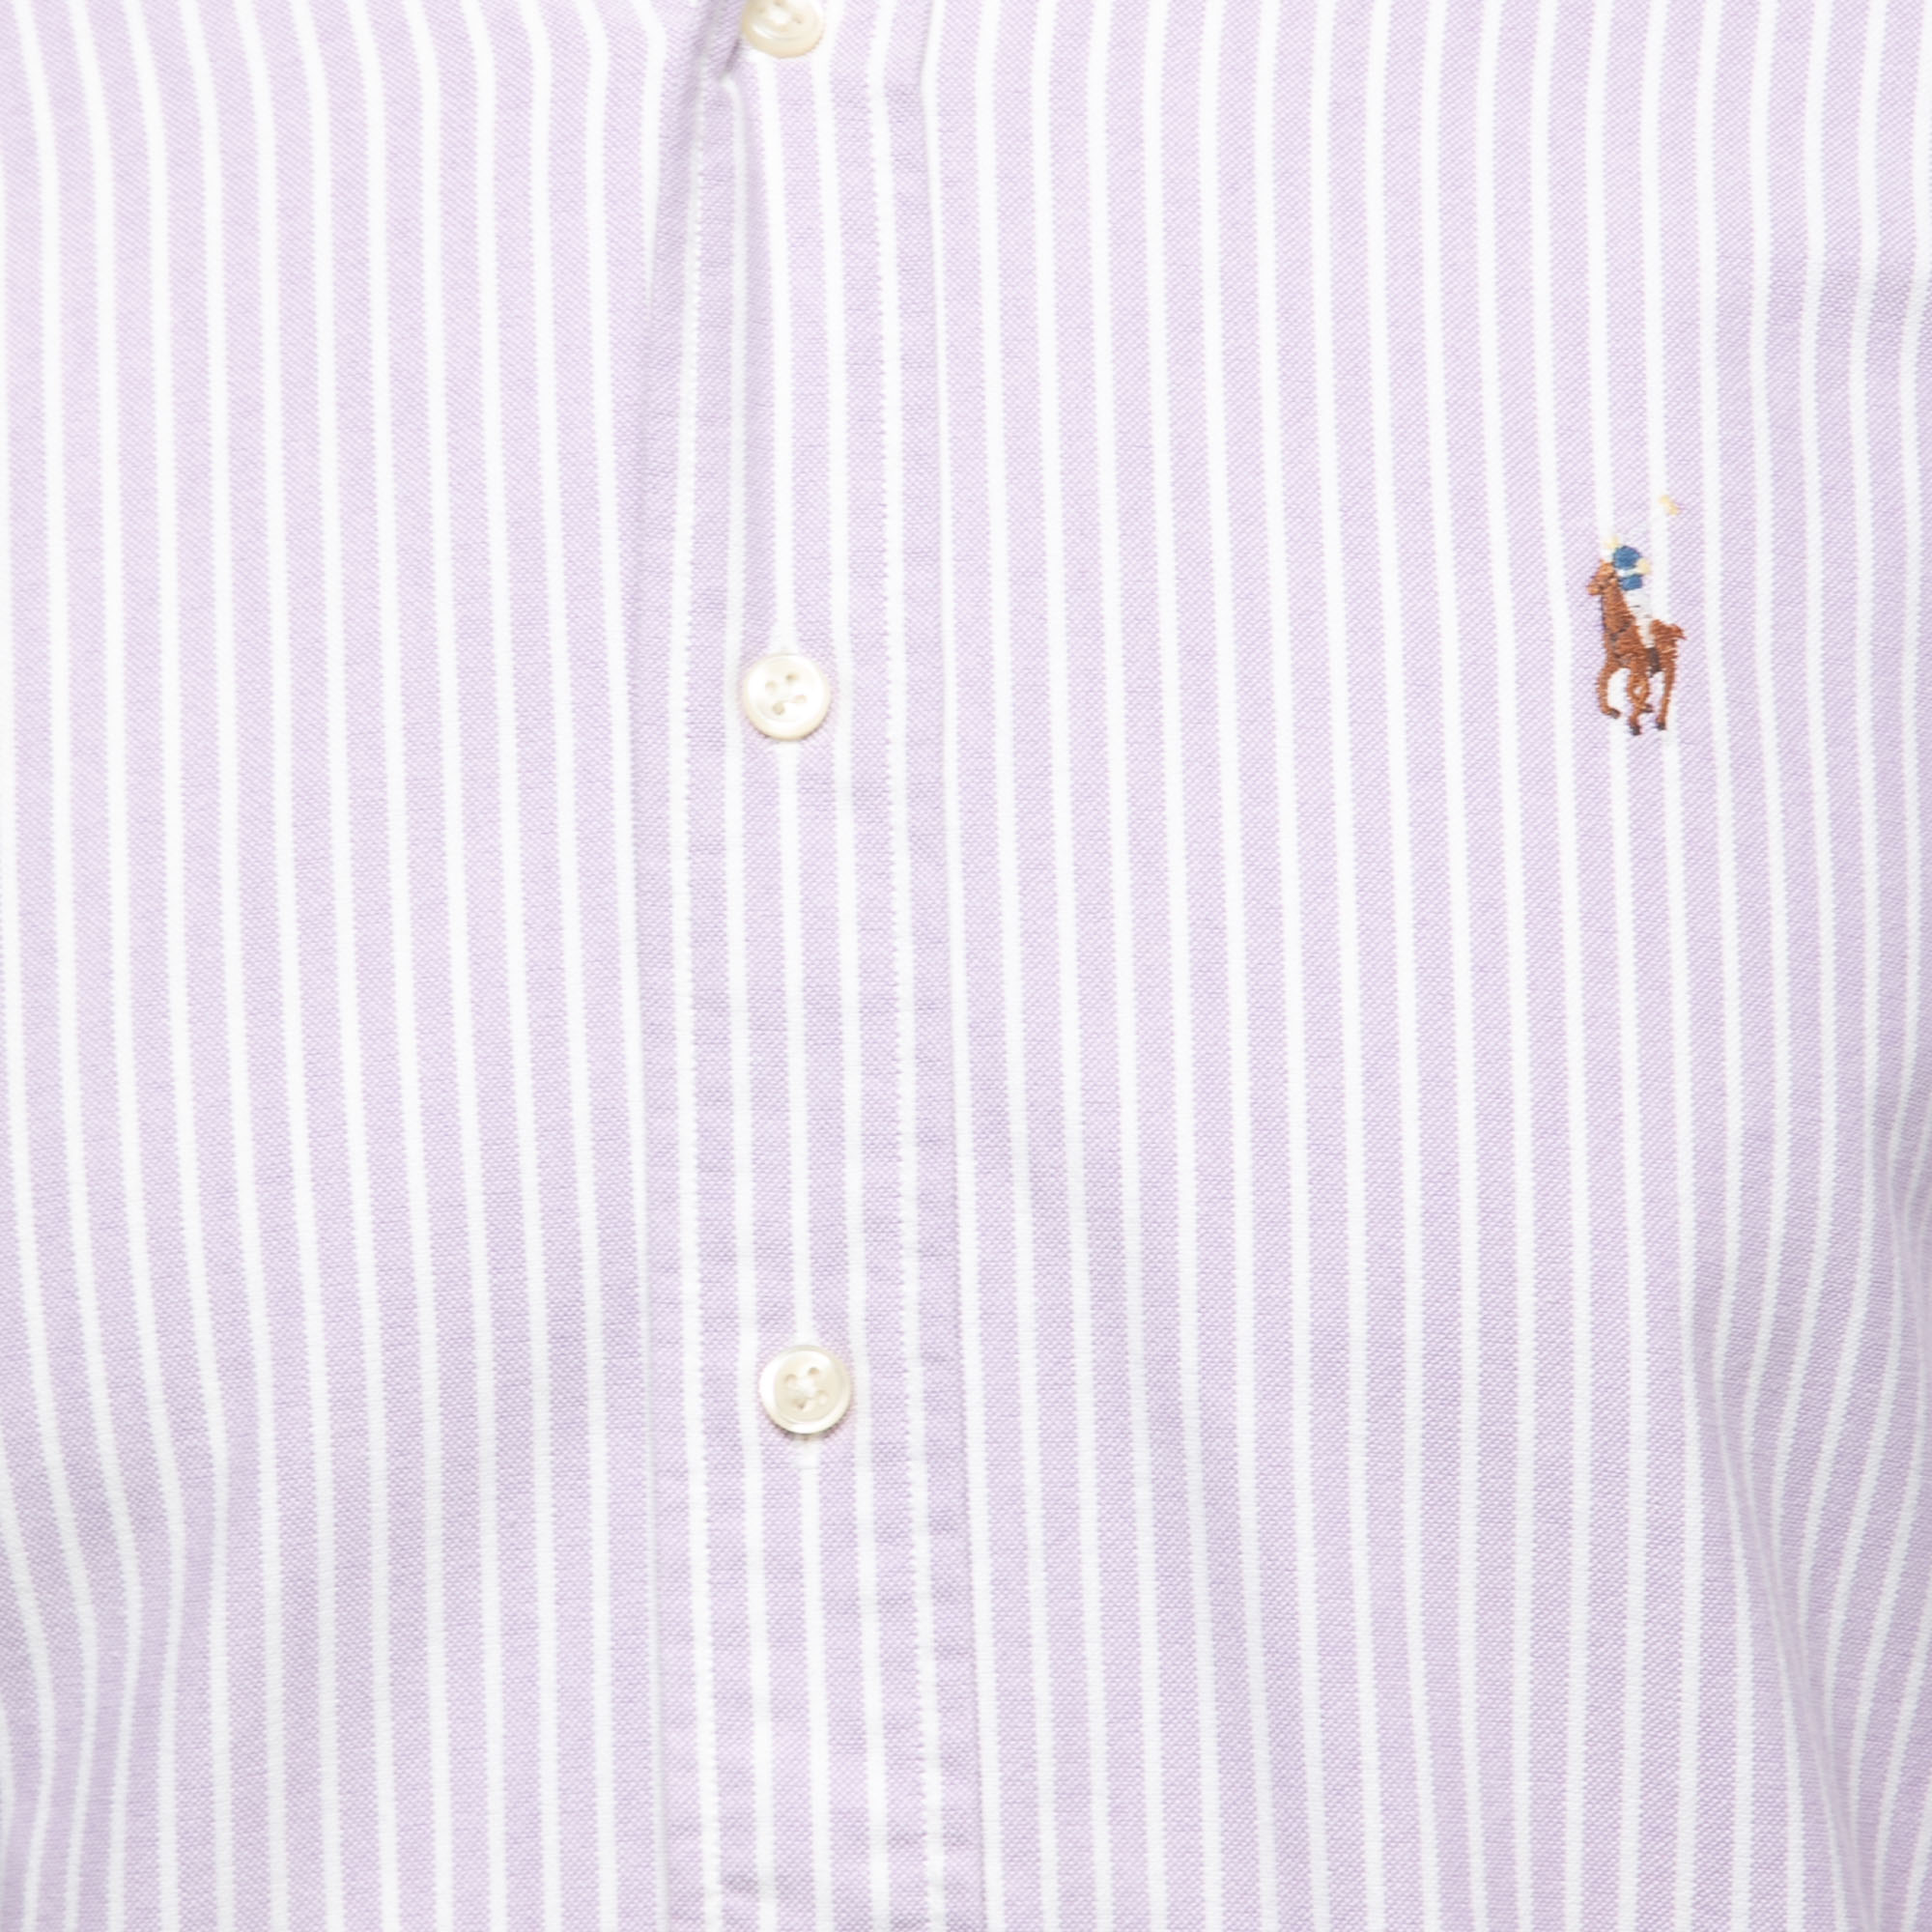 Ralph Lauren Purple Striped Cotton Full Sleeve Classic Fit Shirt M